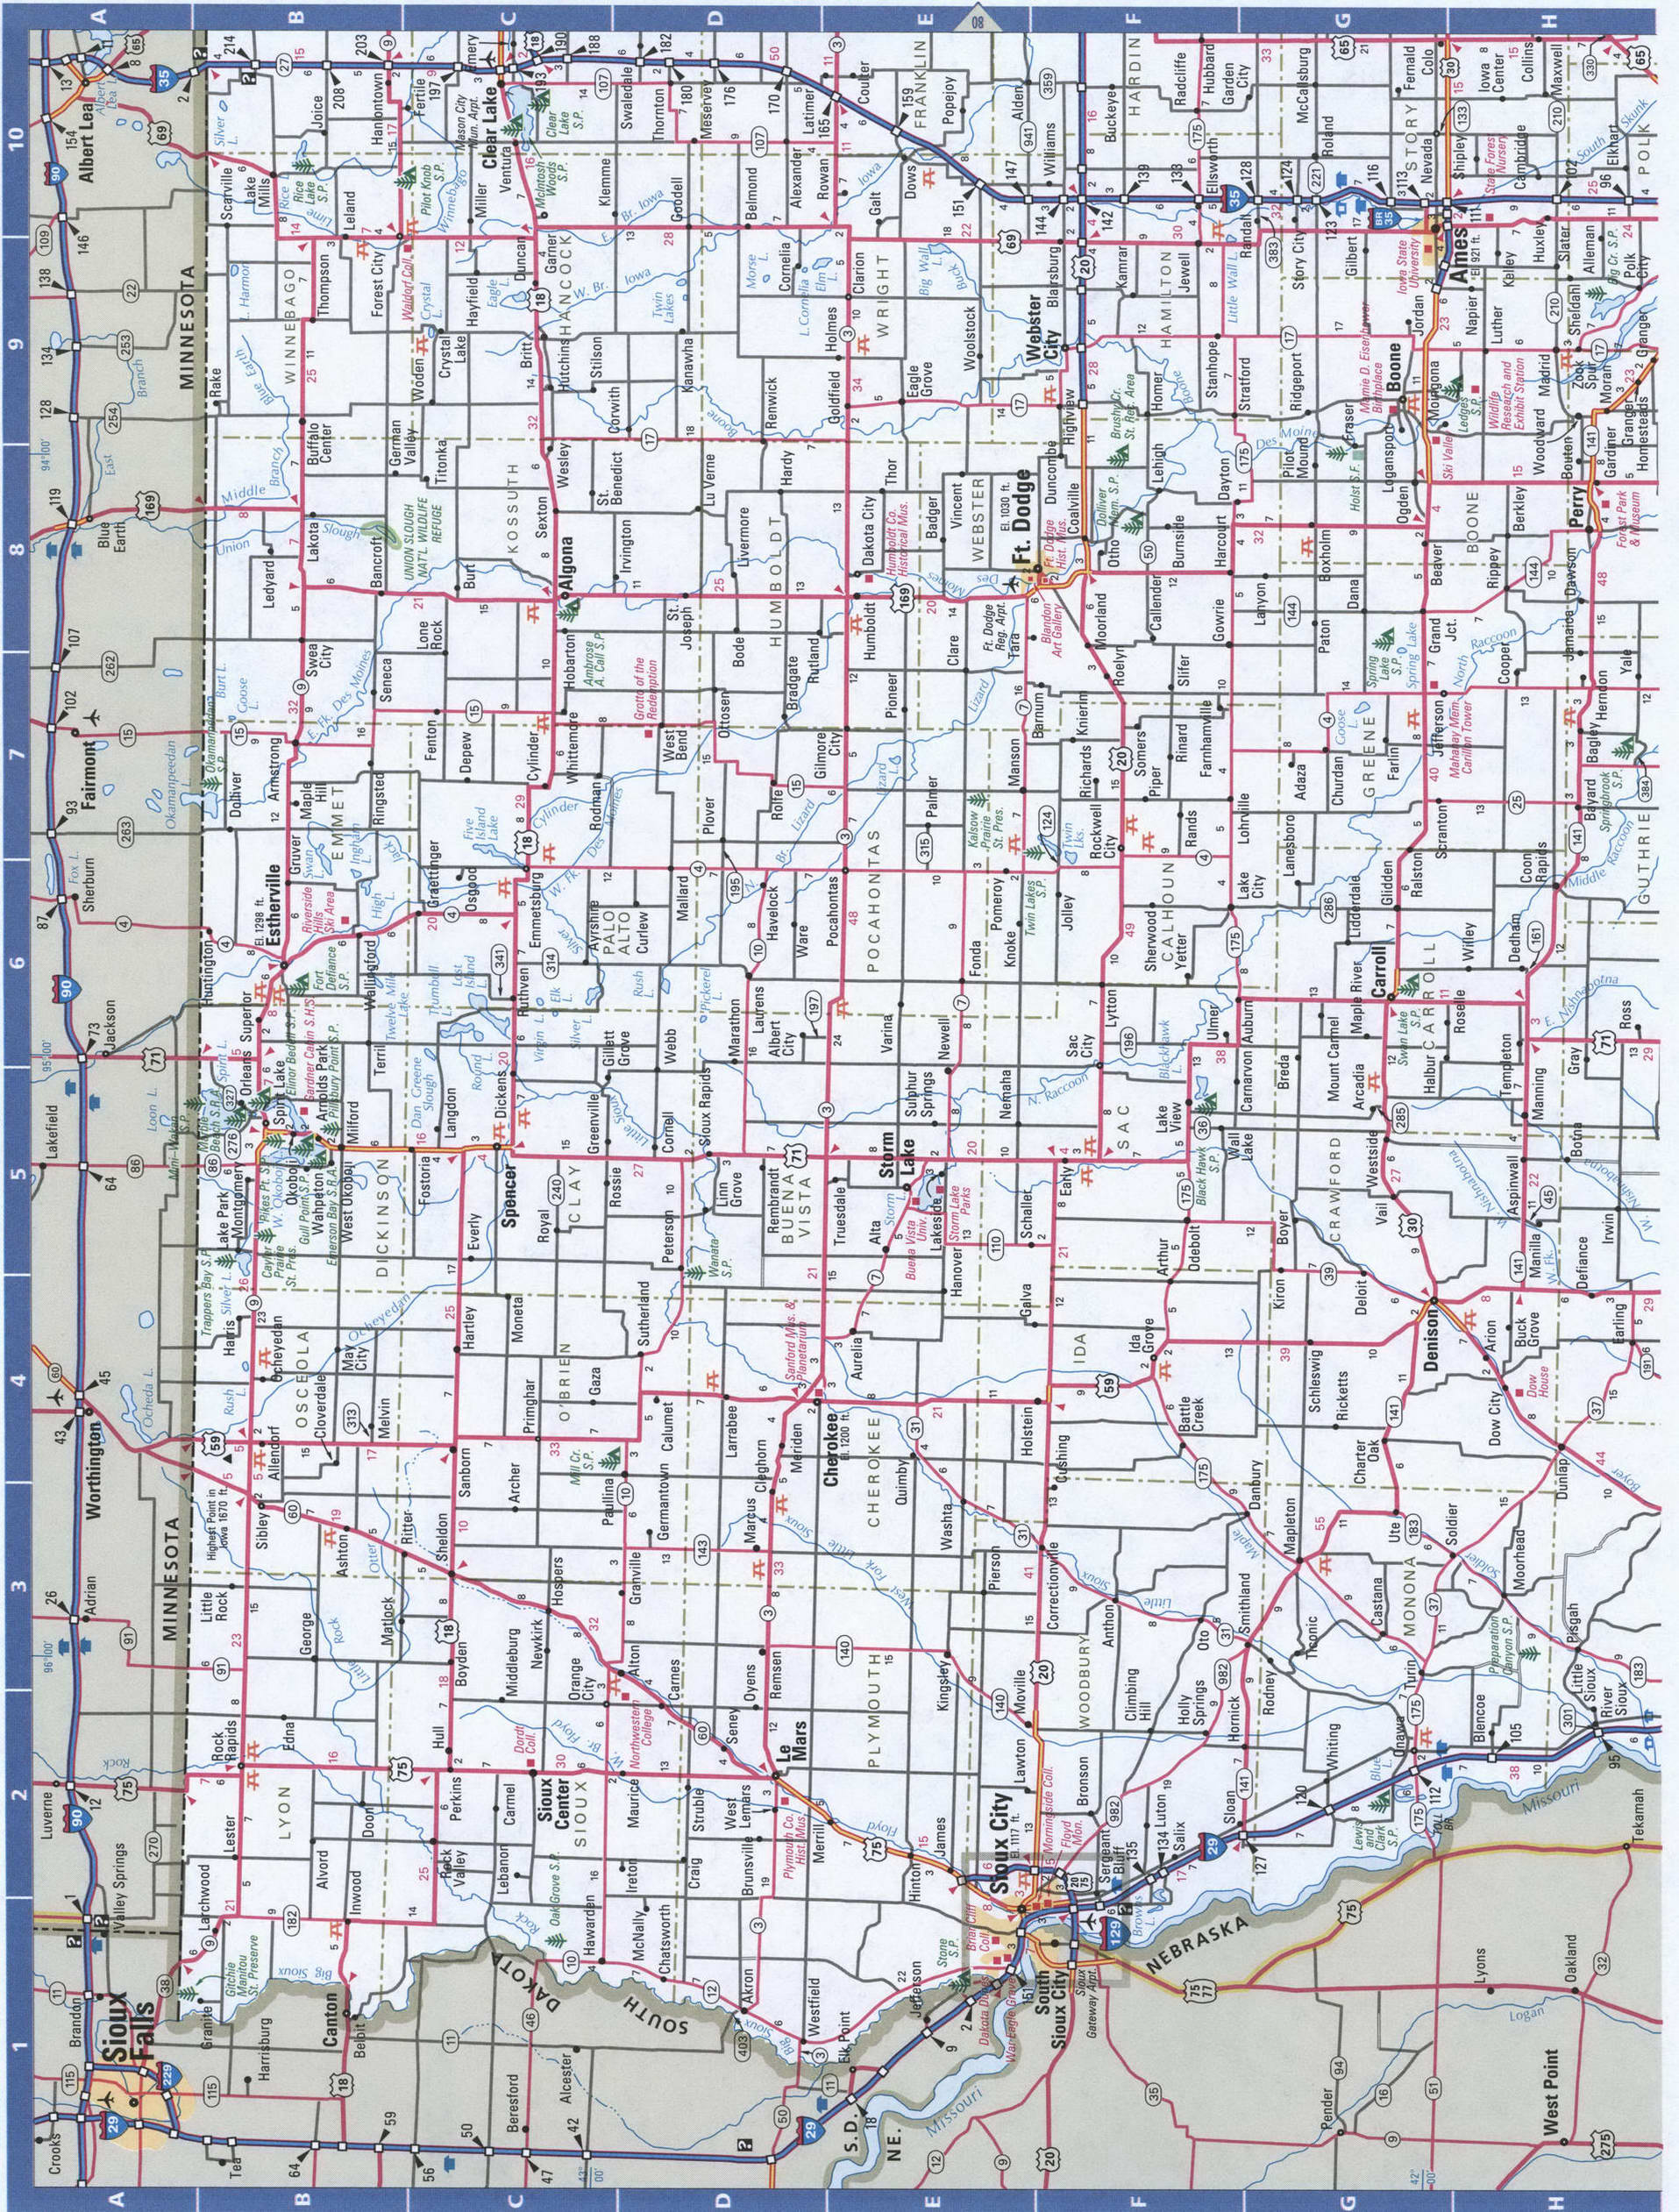 Western Iowa Highway Roads Mapmap Of West Iowa Cities And Highways 9152